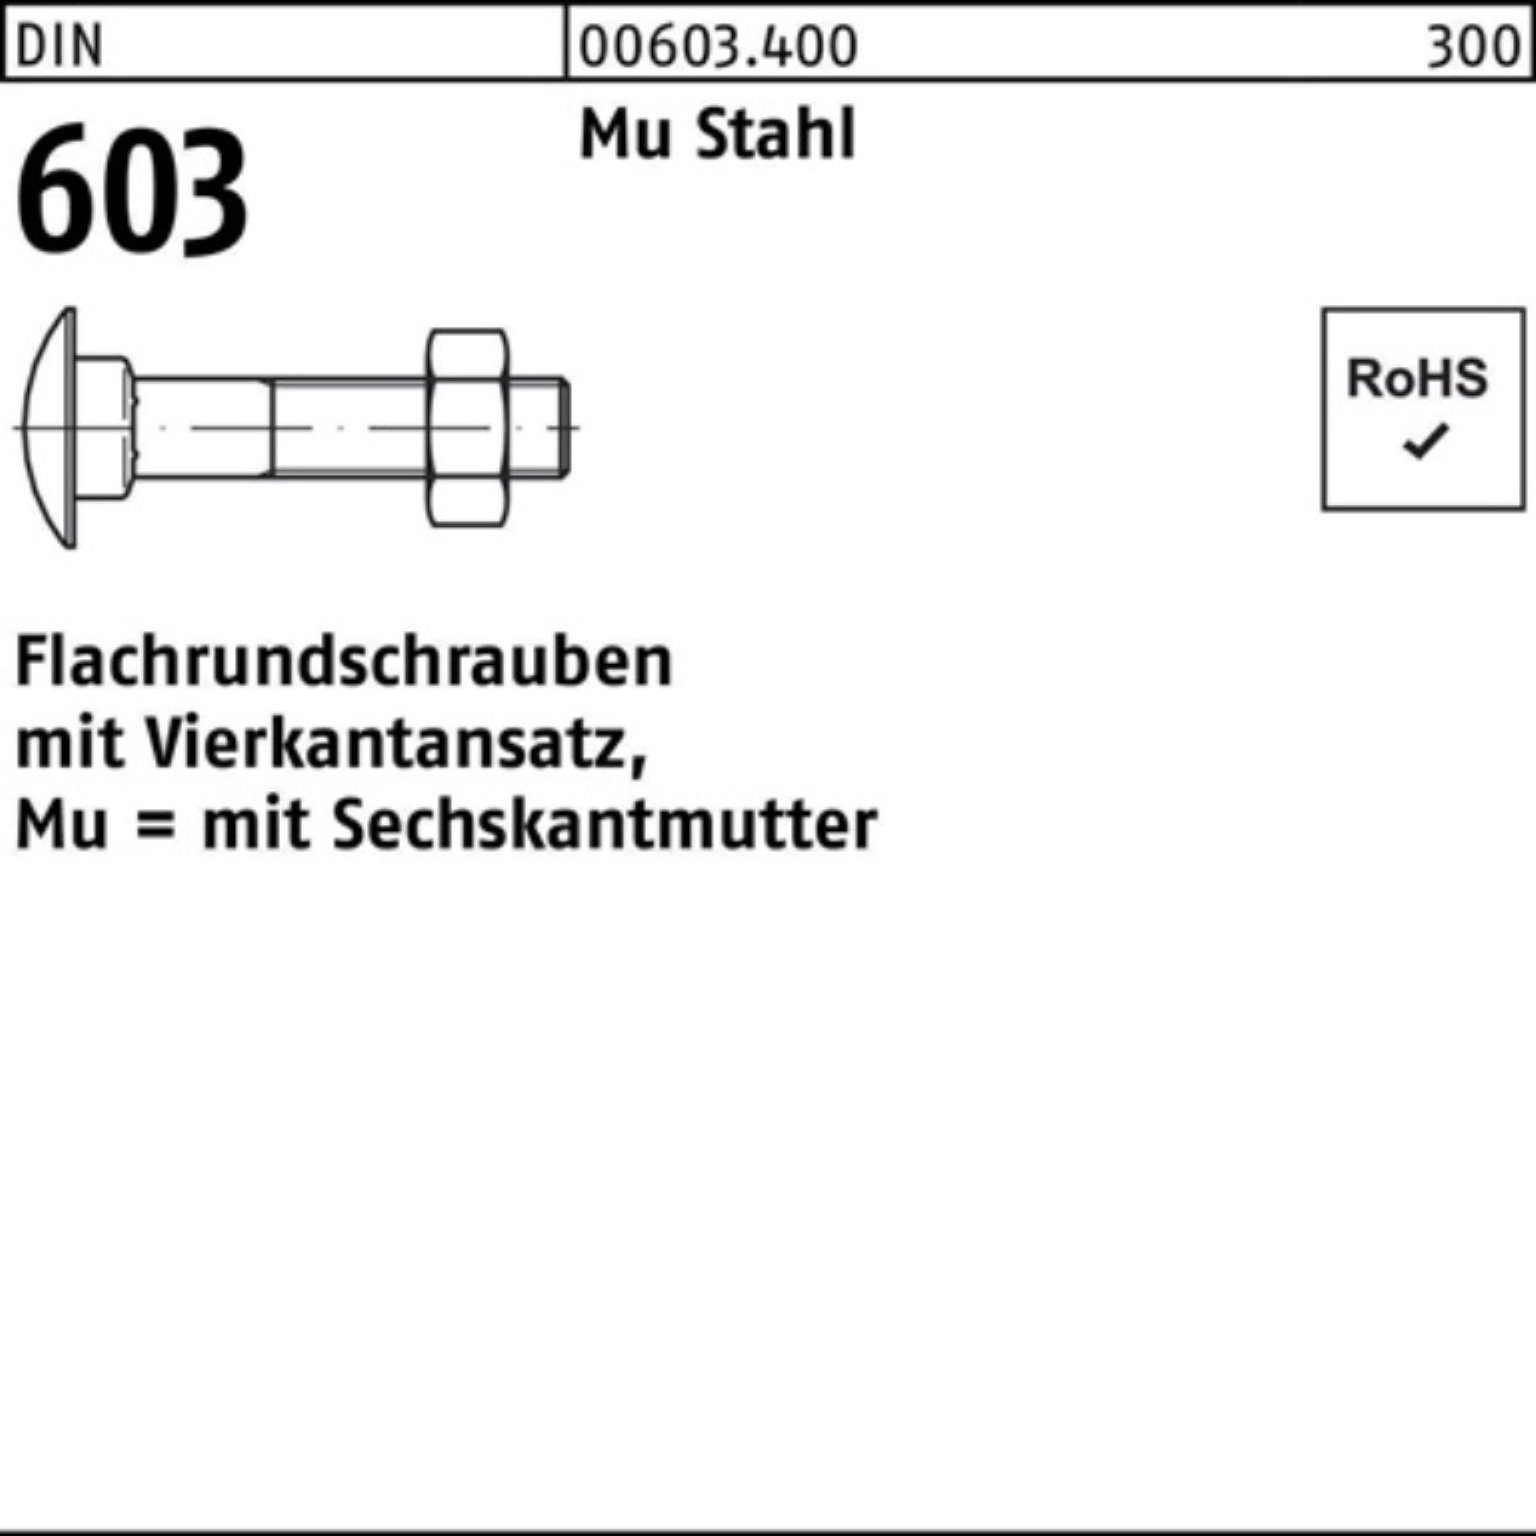 Schraube M Pack Vierkantansatz/6-ktmutter Reyher 500er DIN Flachrundschraube 603 M6x30